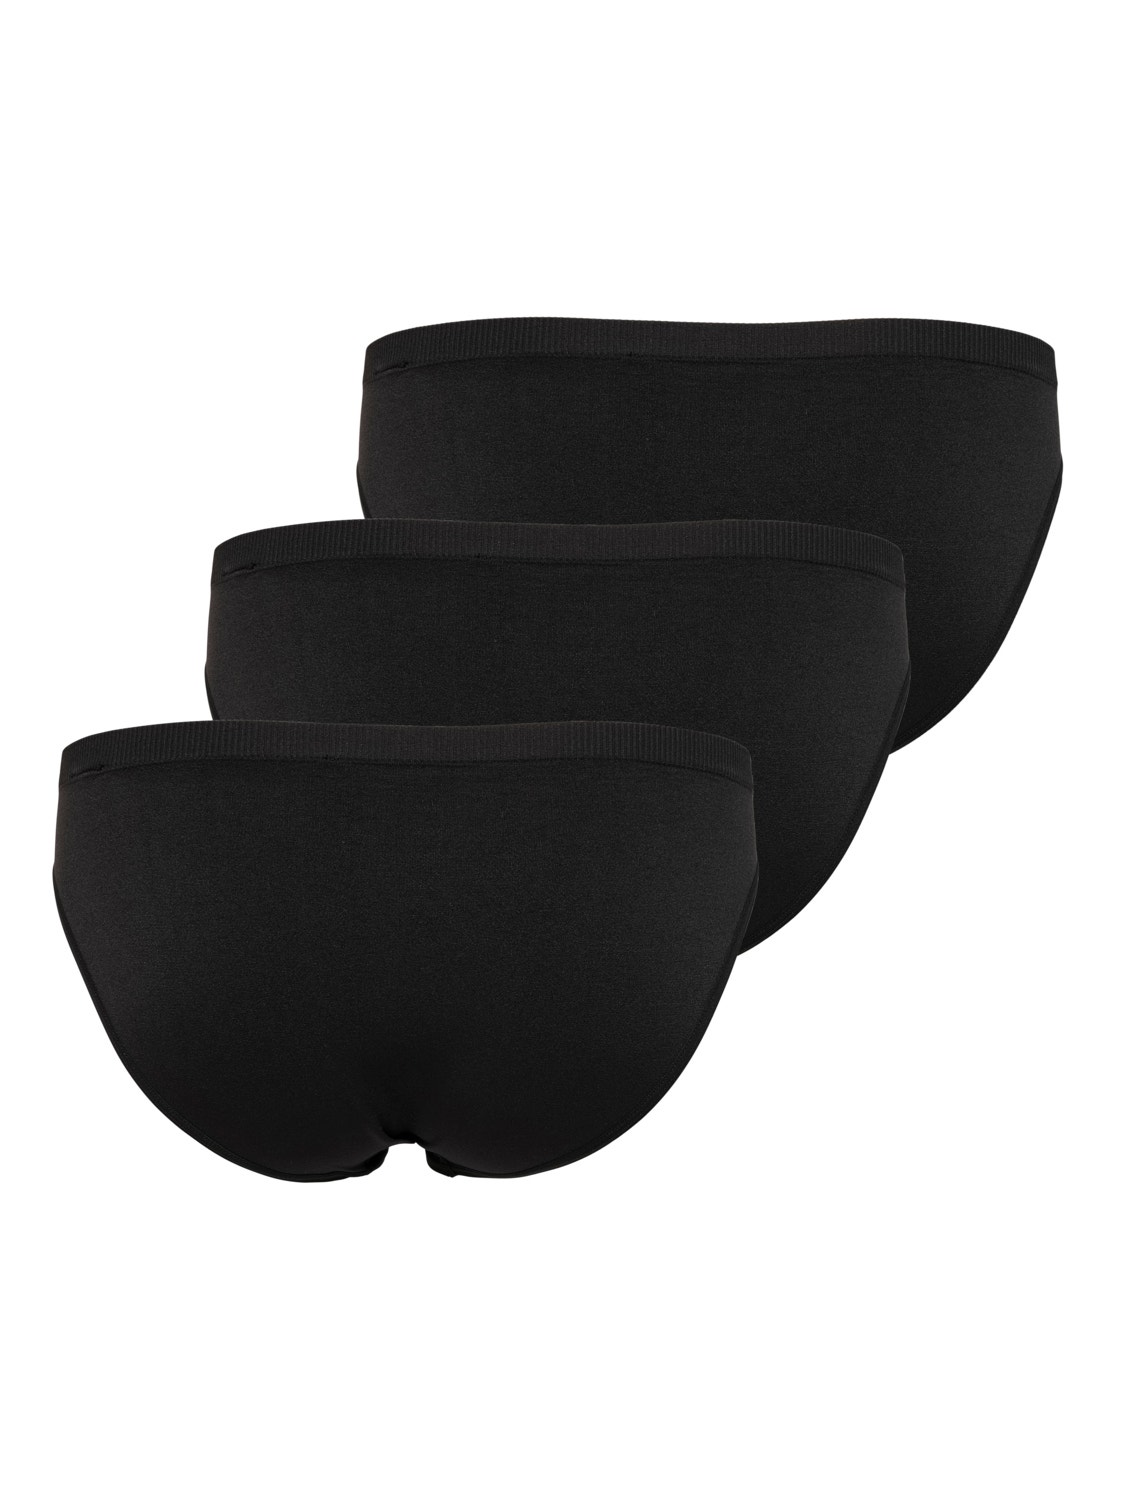 ONLY Niedrige Taille Unterhose -Black - 15260624